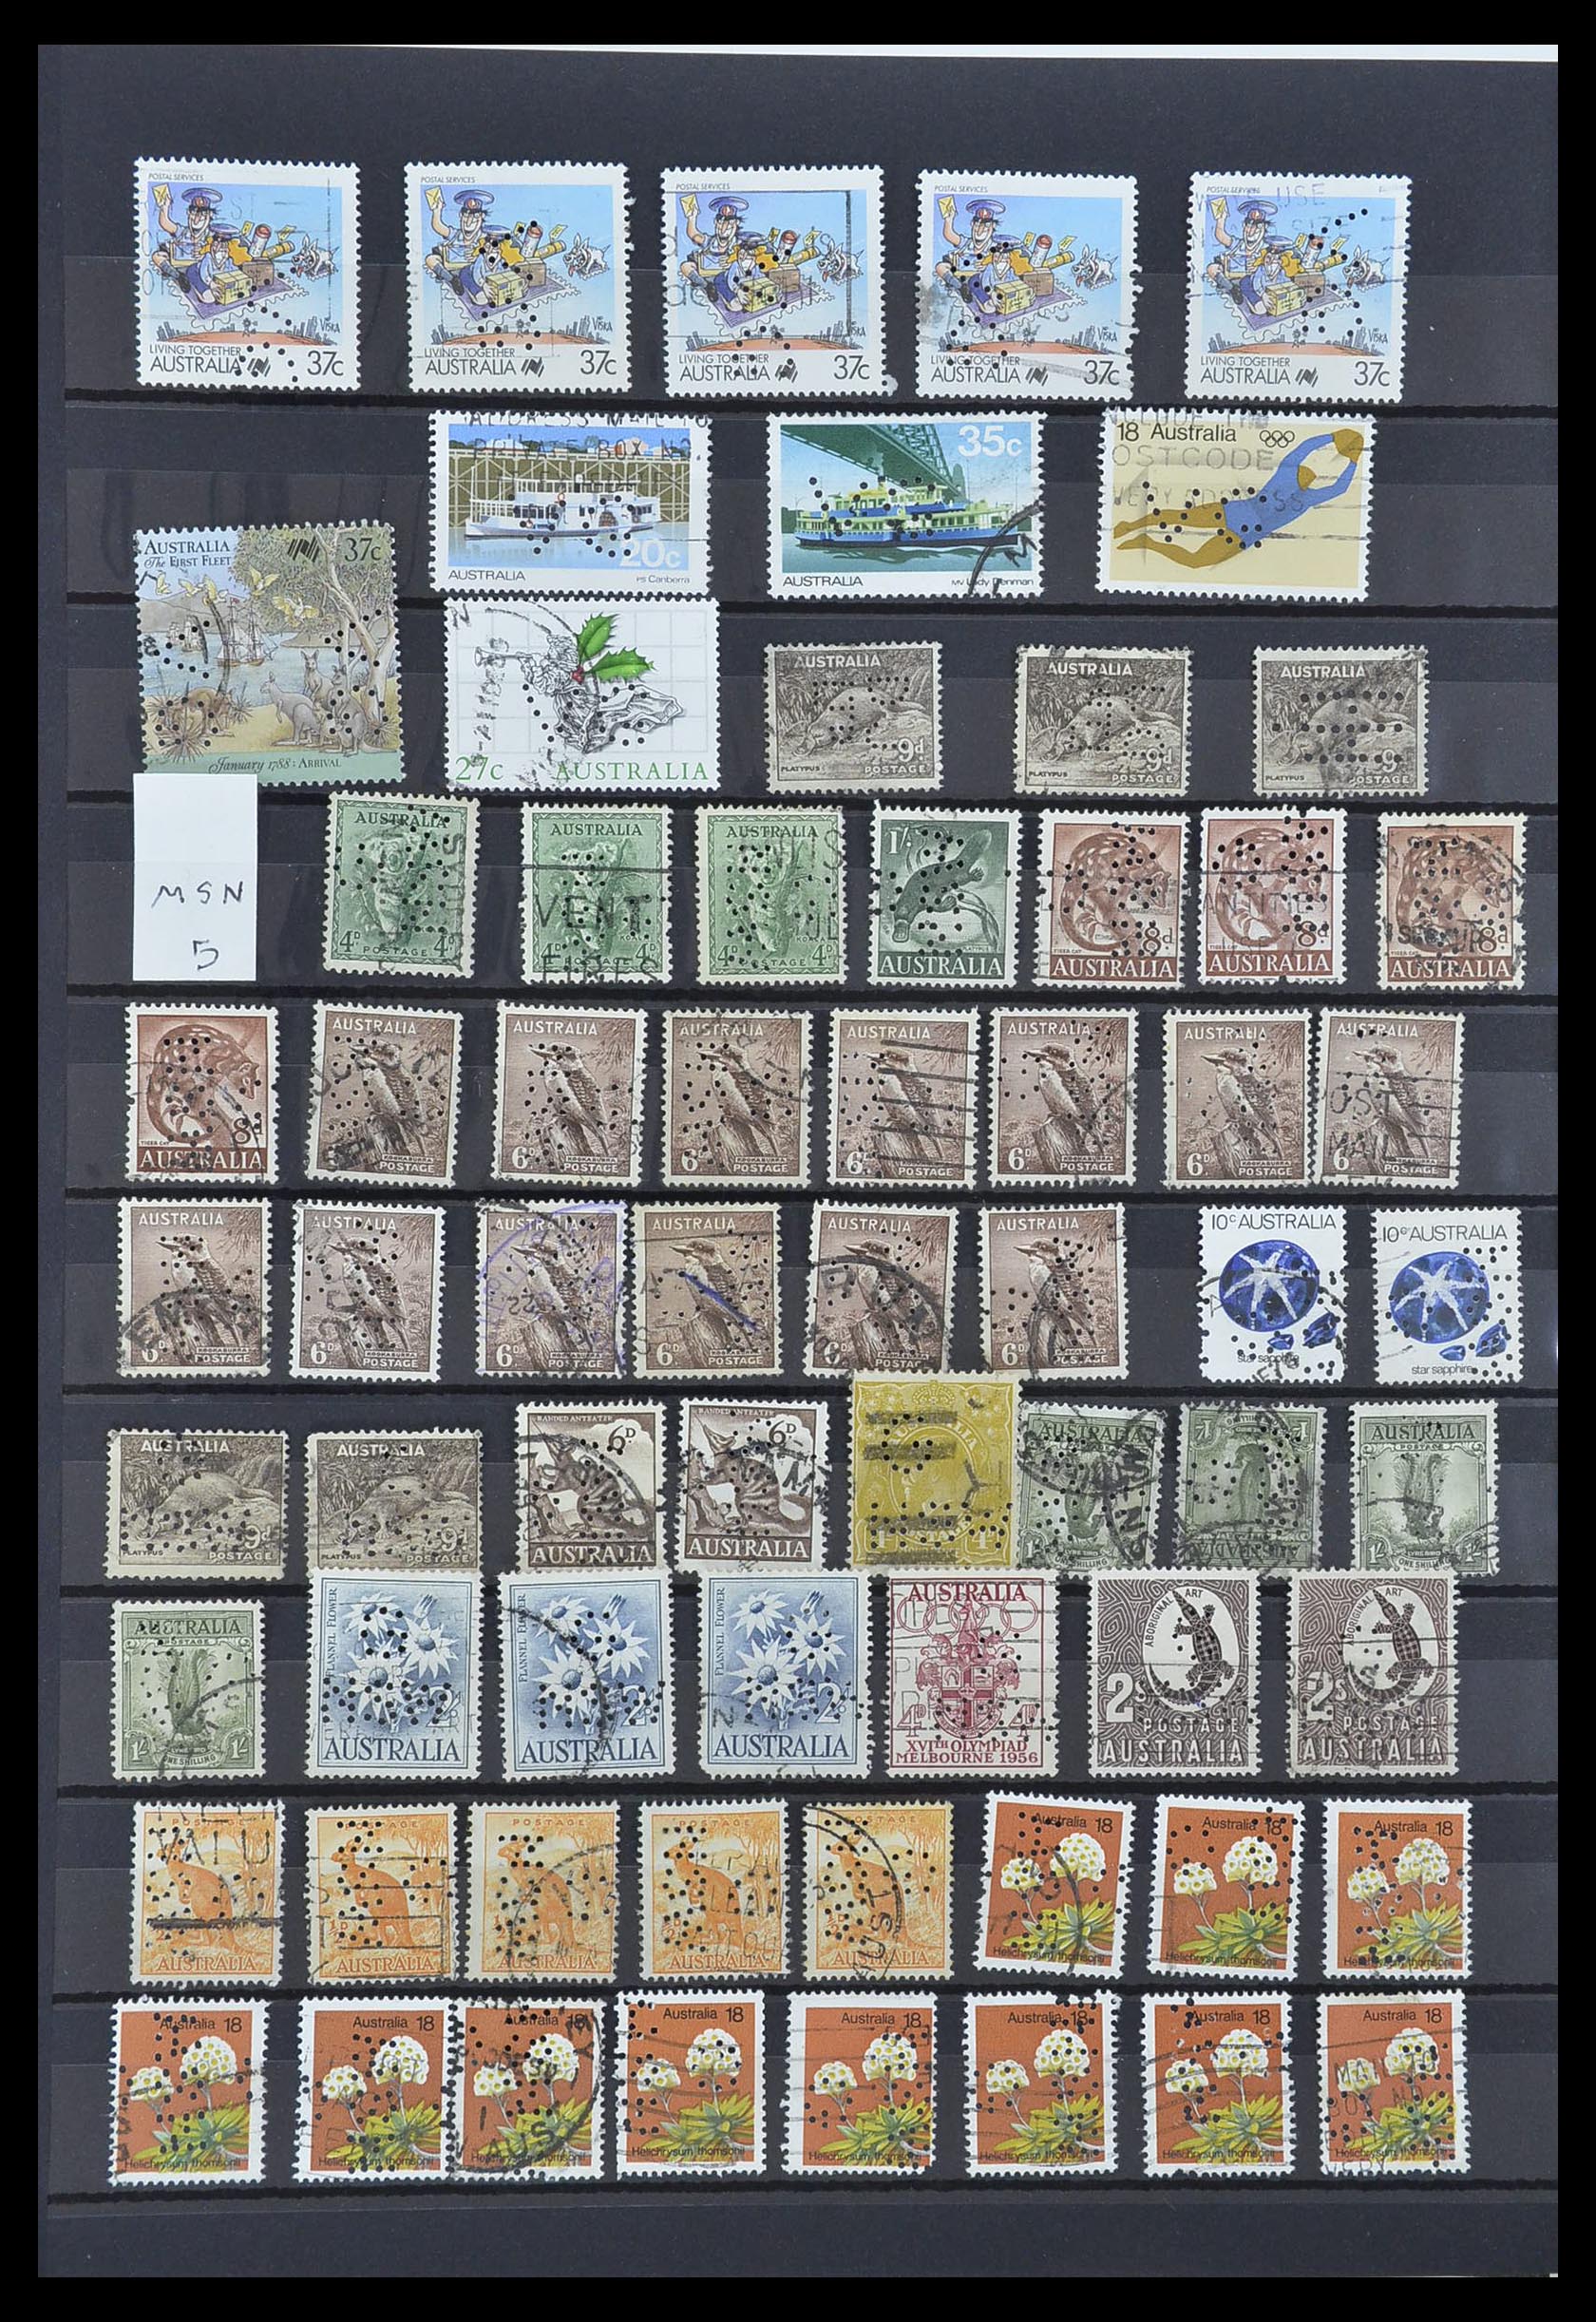 33510 010 - Stamp collection 33510 Australia perfins 1900-1970.